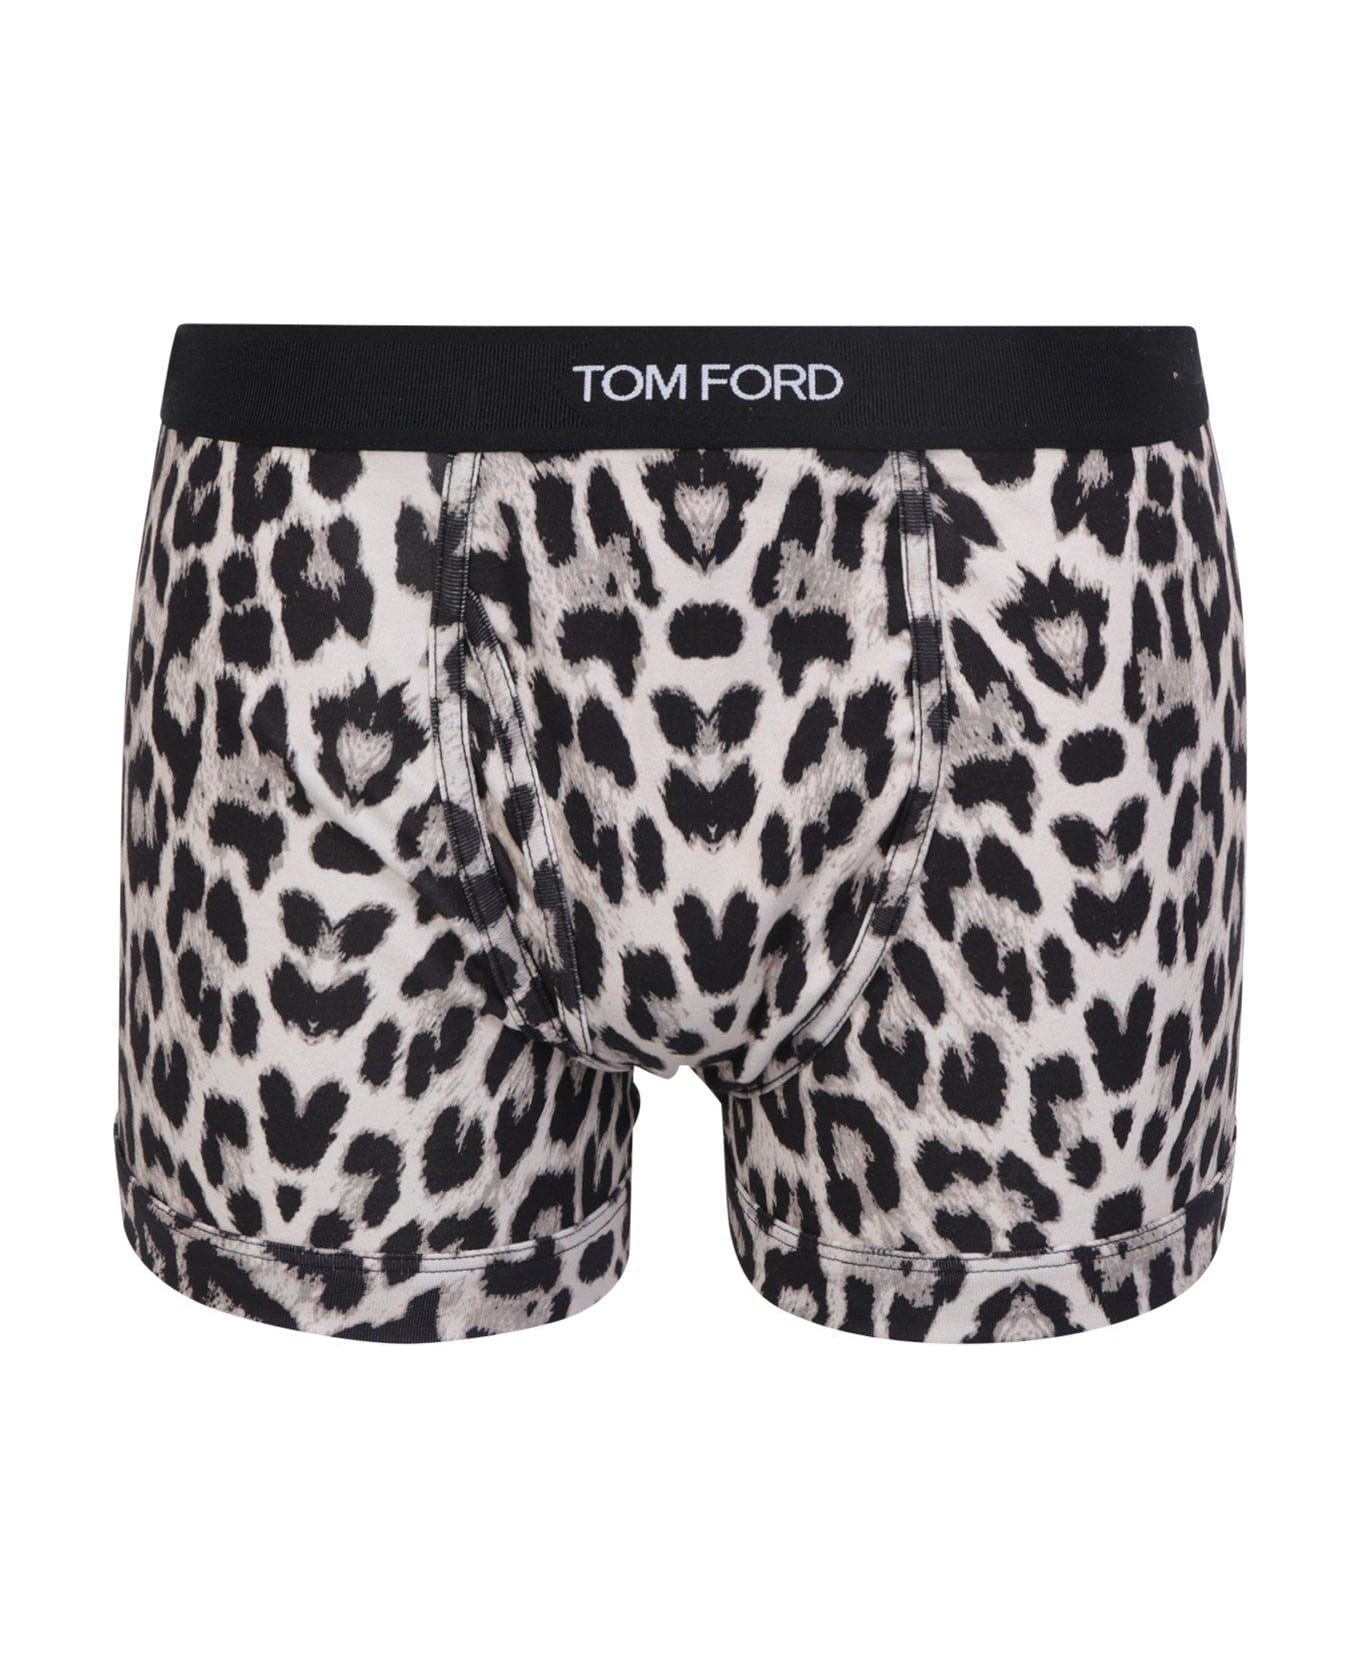 Tom Ford Animal Print Skinny Cut Boxers - Beige